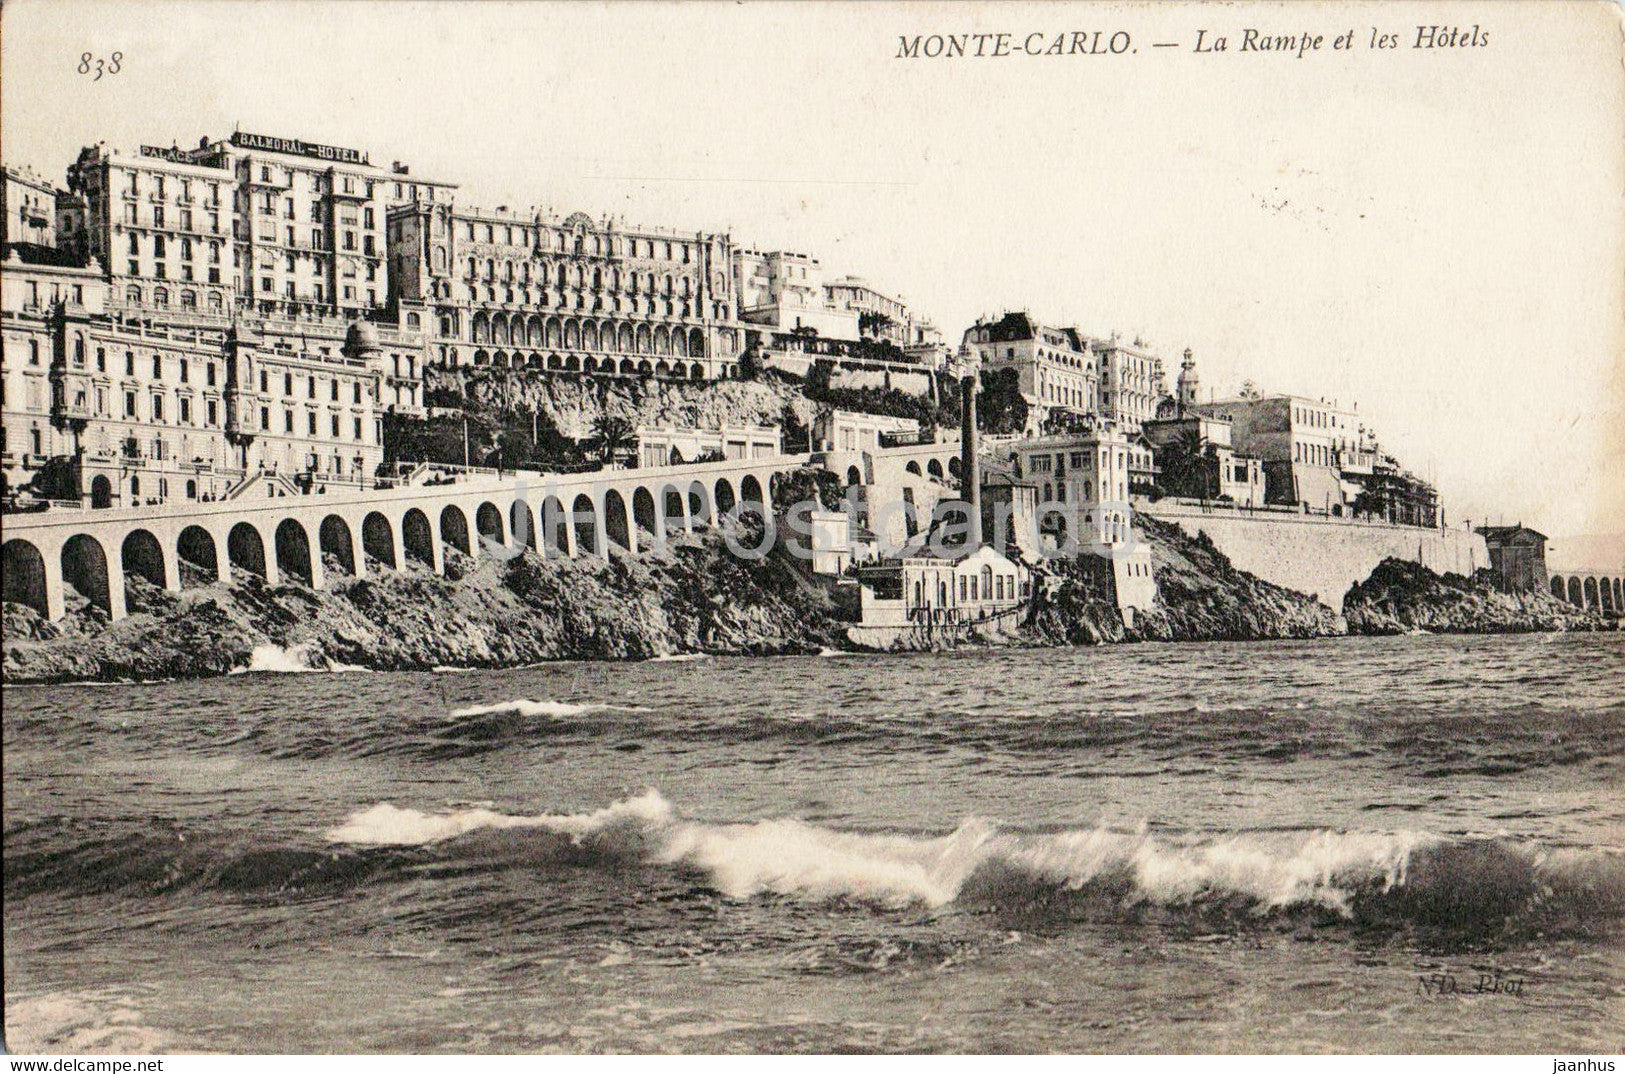 Monte Carlo - La Rampe et les Hotels - 838 - old postcard - Monaco - used - JH Postcards